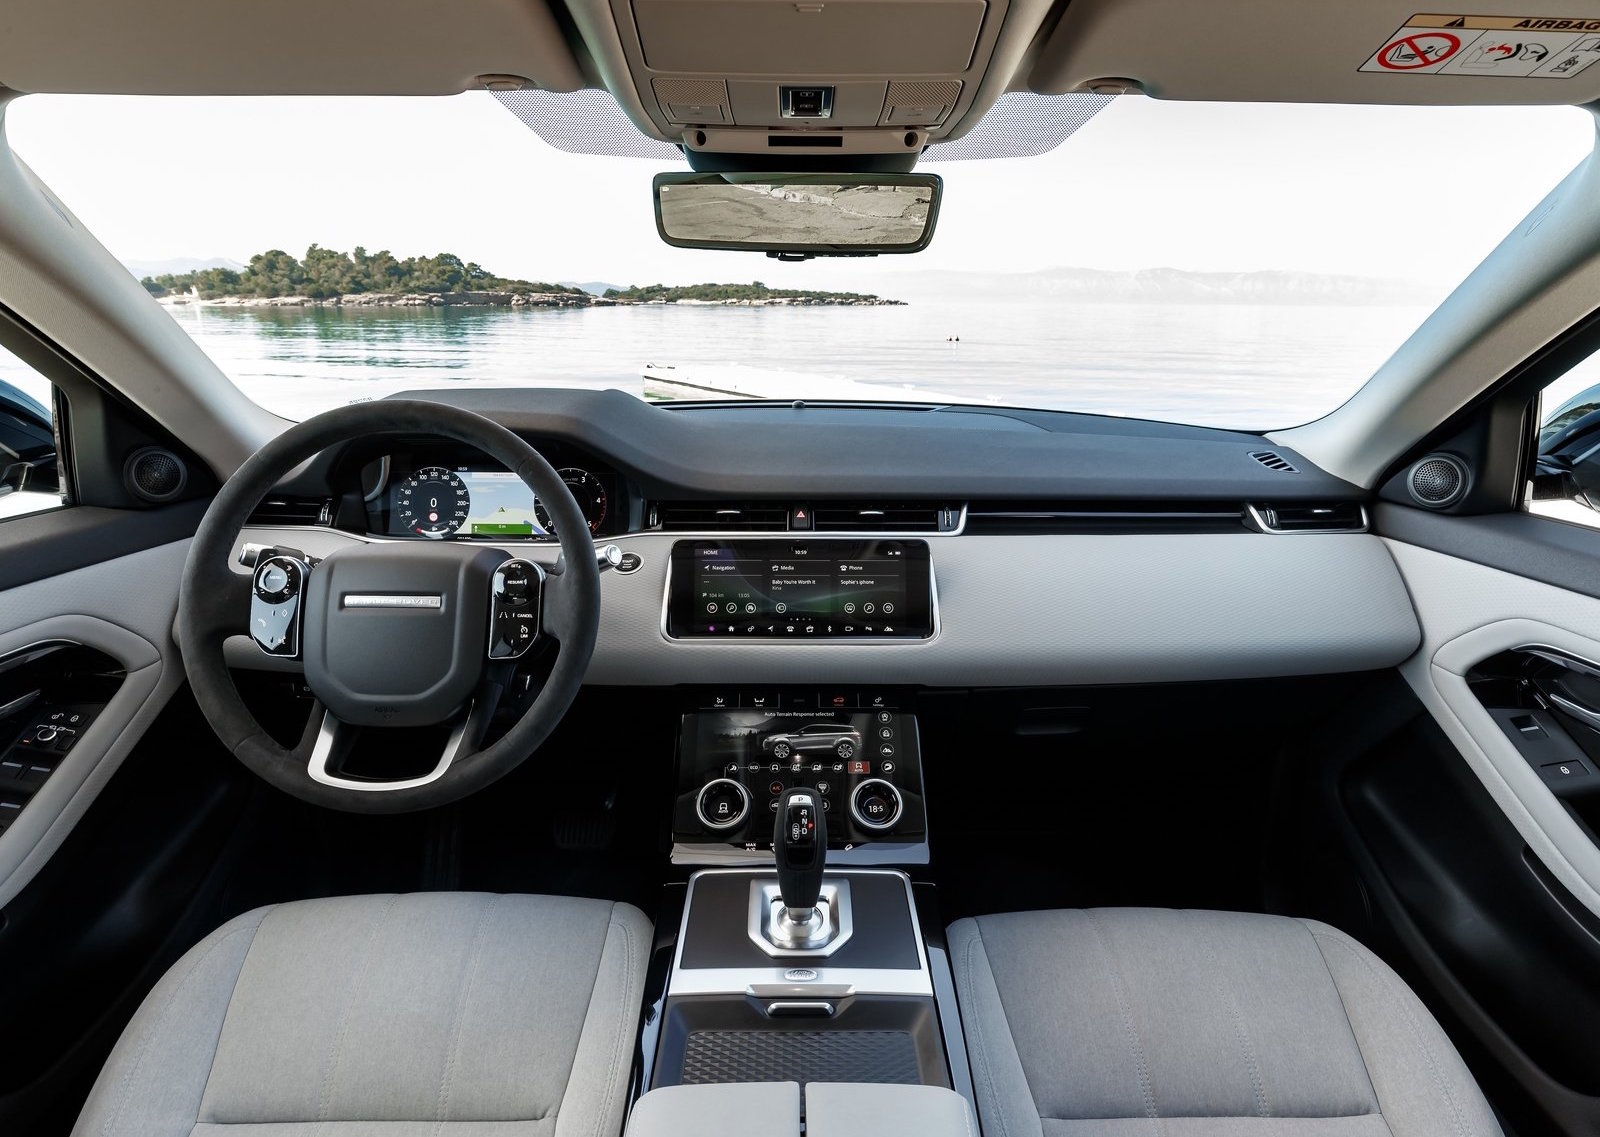 Range Rover Interior 2020  - The Upper Screen Controls Most Infotainment.